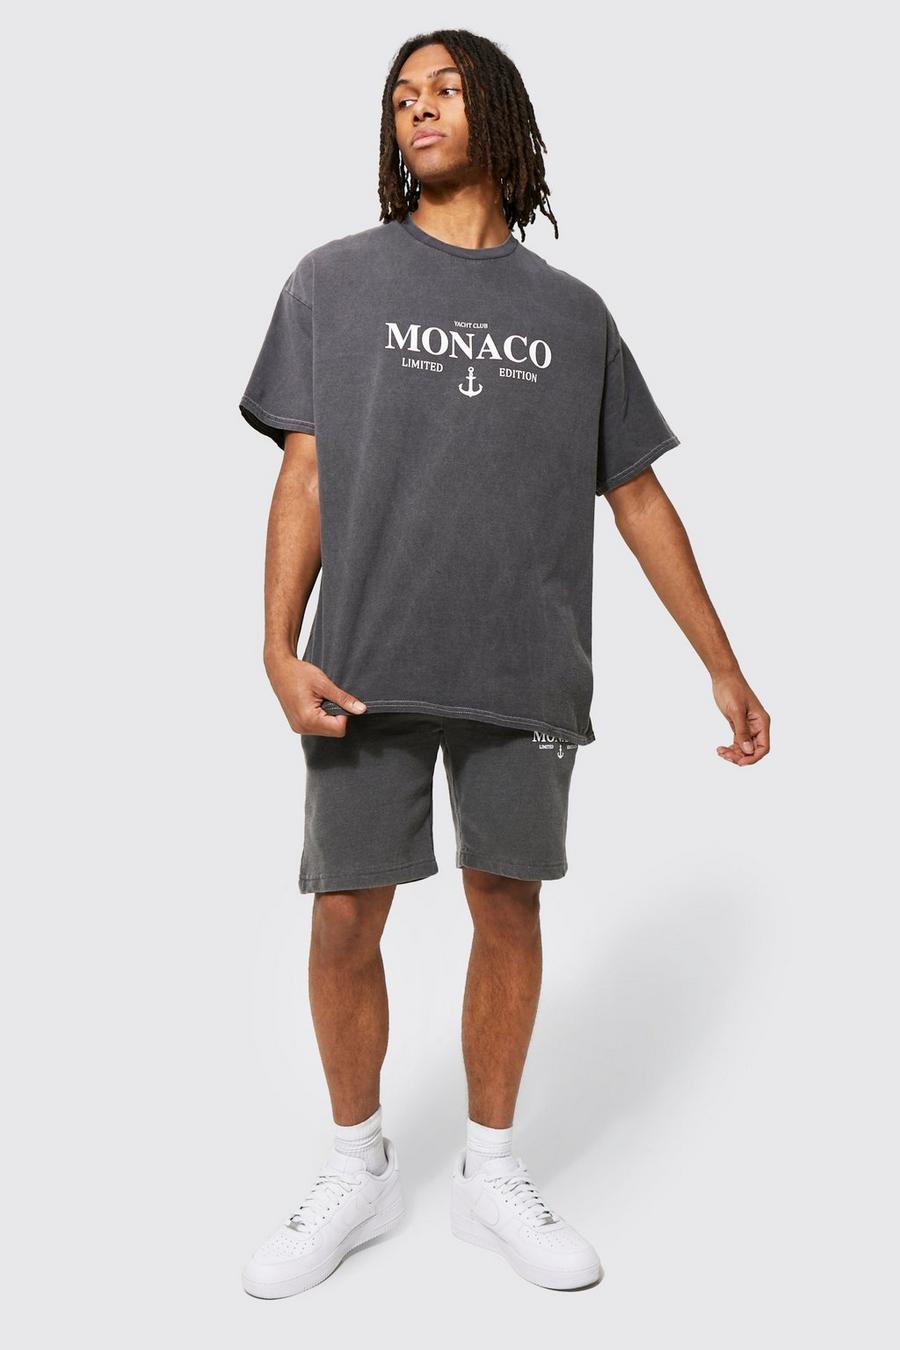 Charcoal Oversized Monaco T-shirt And Short Set image number 1